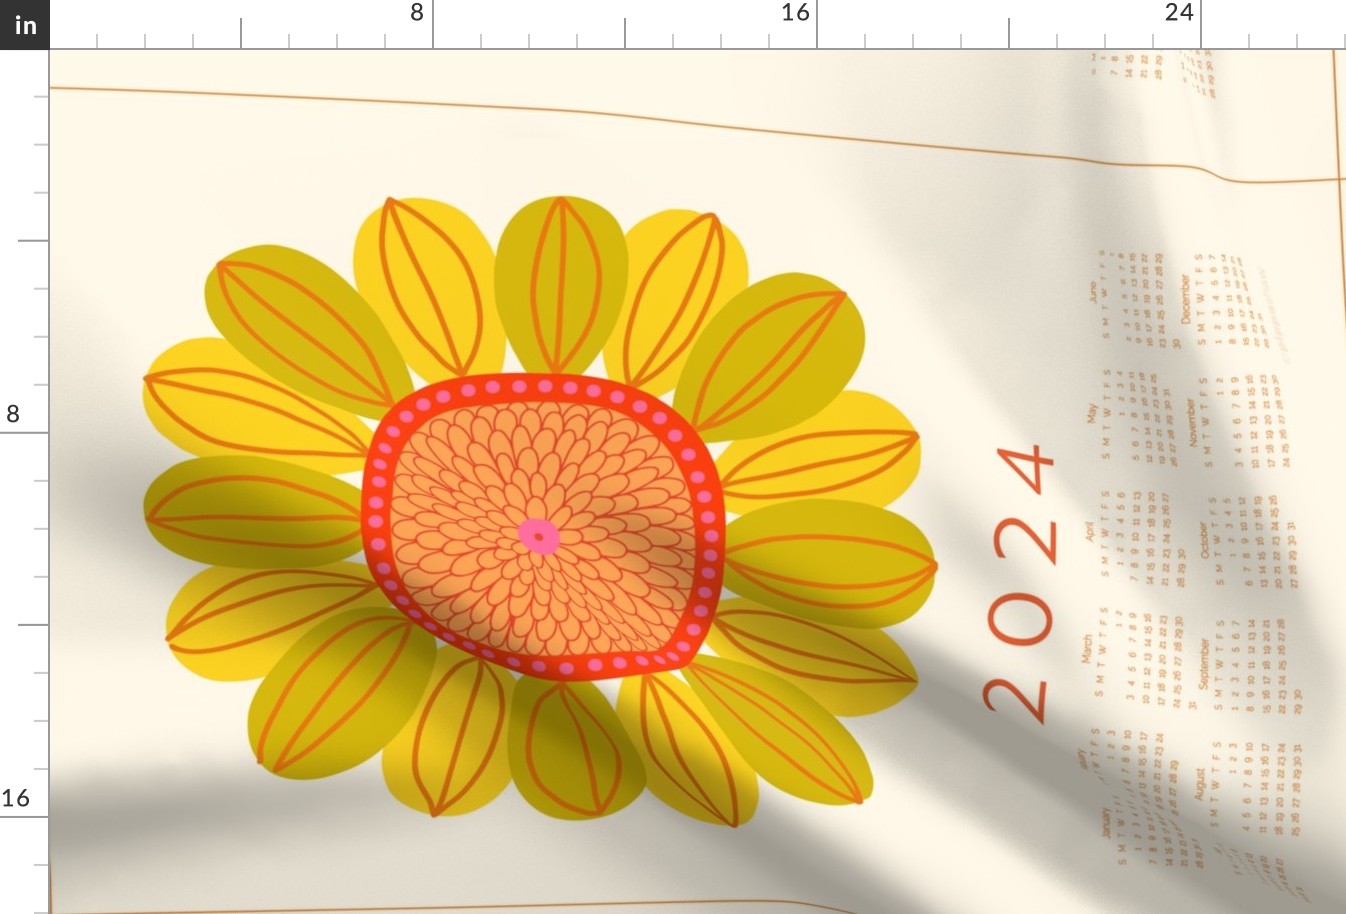 Retro sunflower 2024 tea towel wall hanging by Pippa Shaw